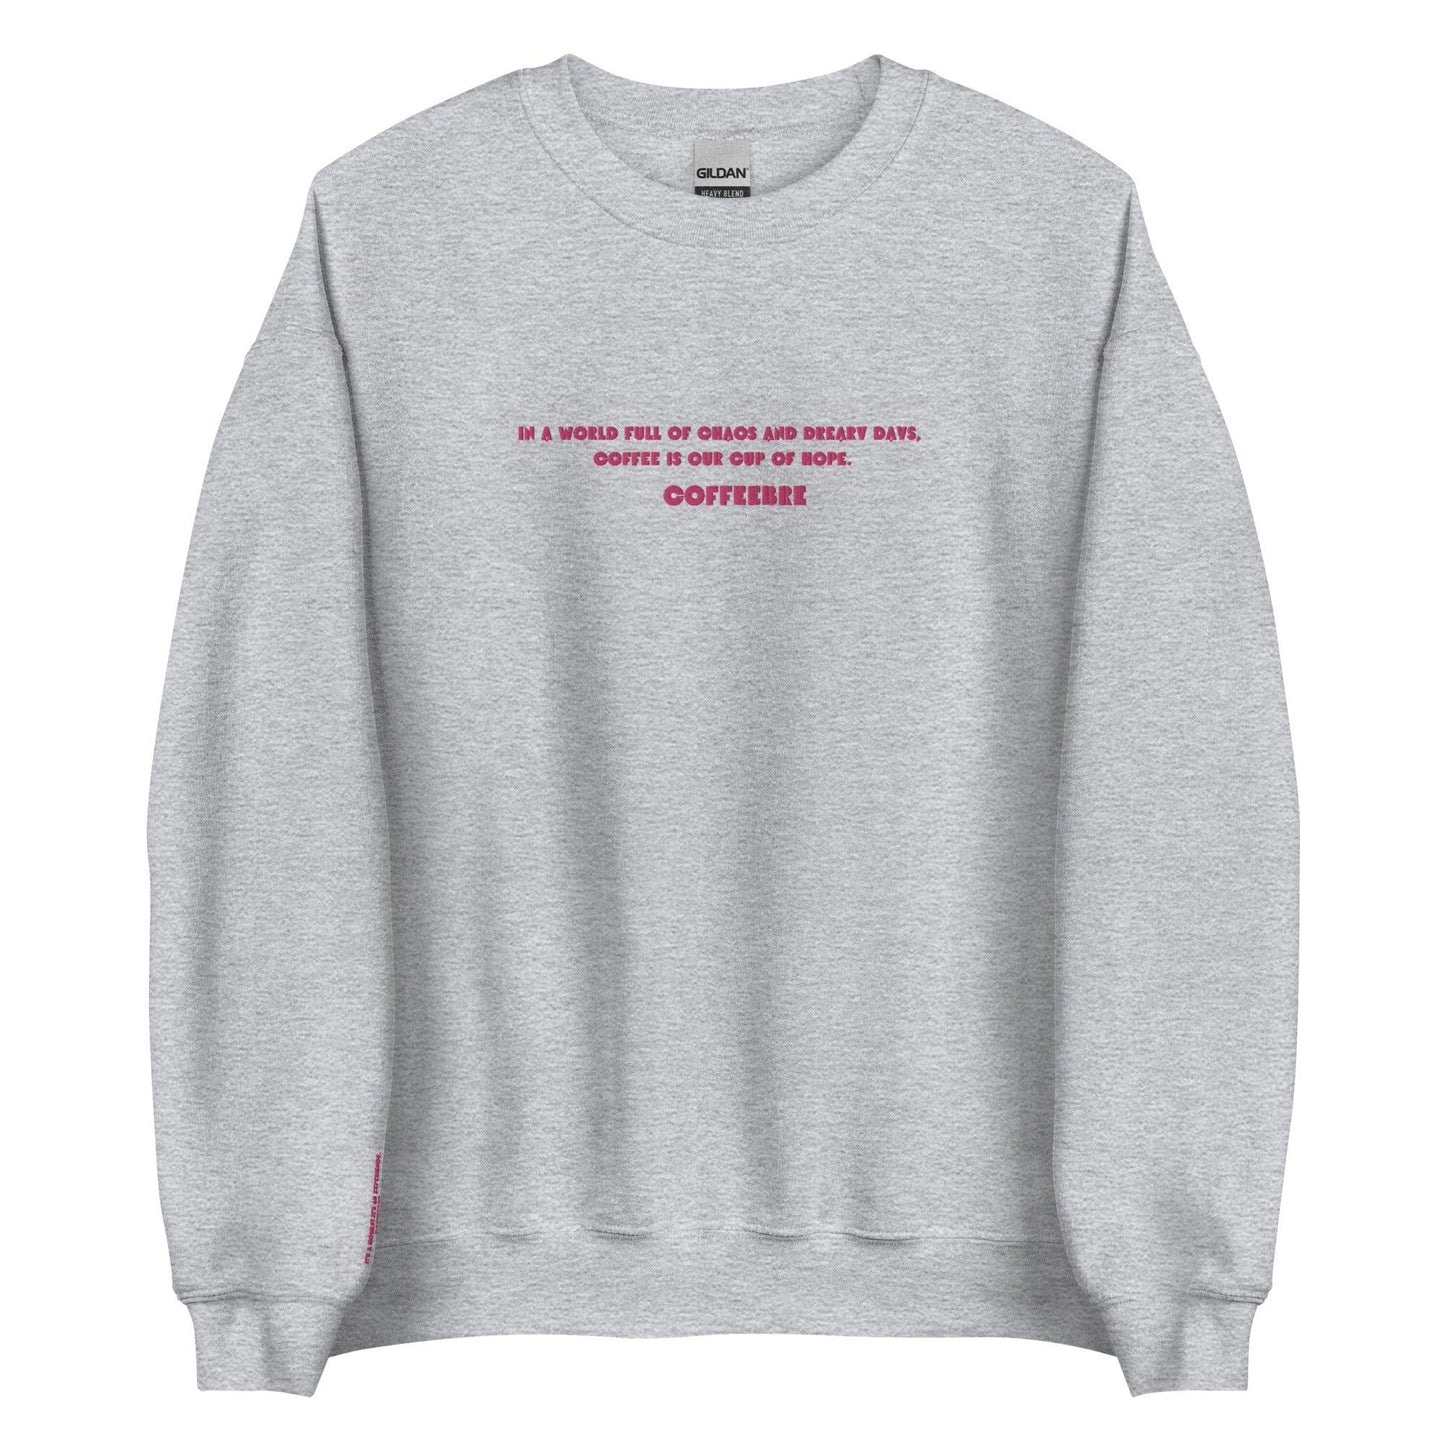 Embroidered Comfy Unisex Sweatshirt - COFFEEBRE